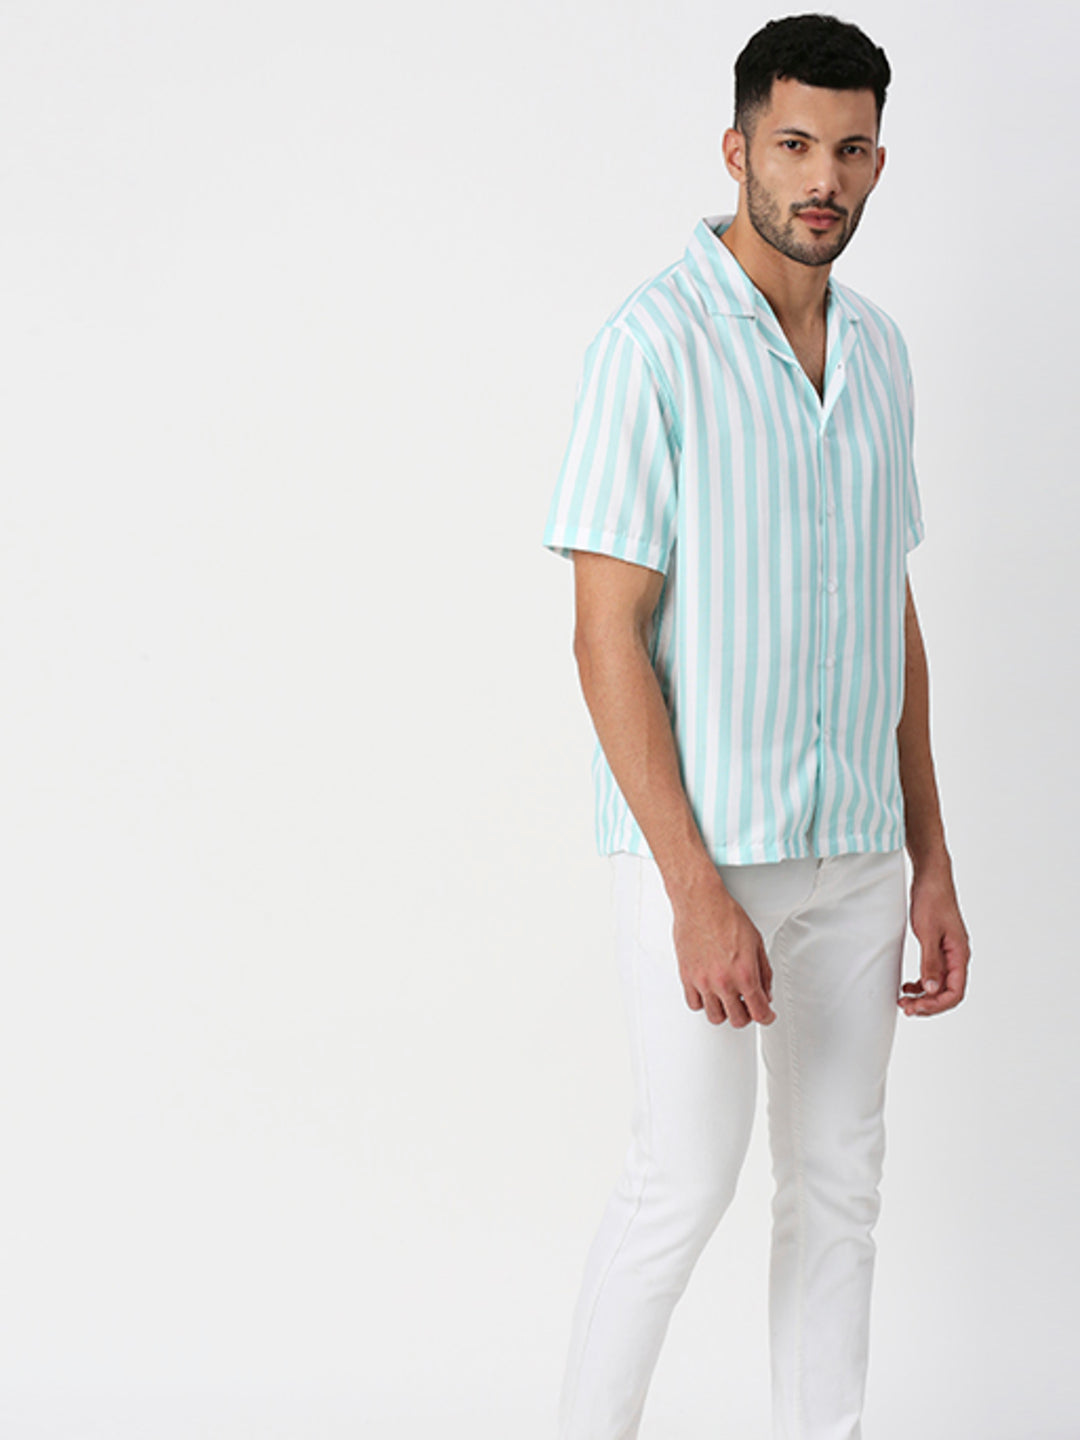 Hemsters White And Light Green Striped Half Sleeves Shirt For Men